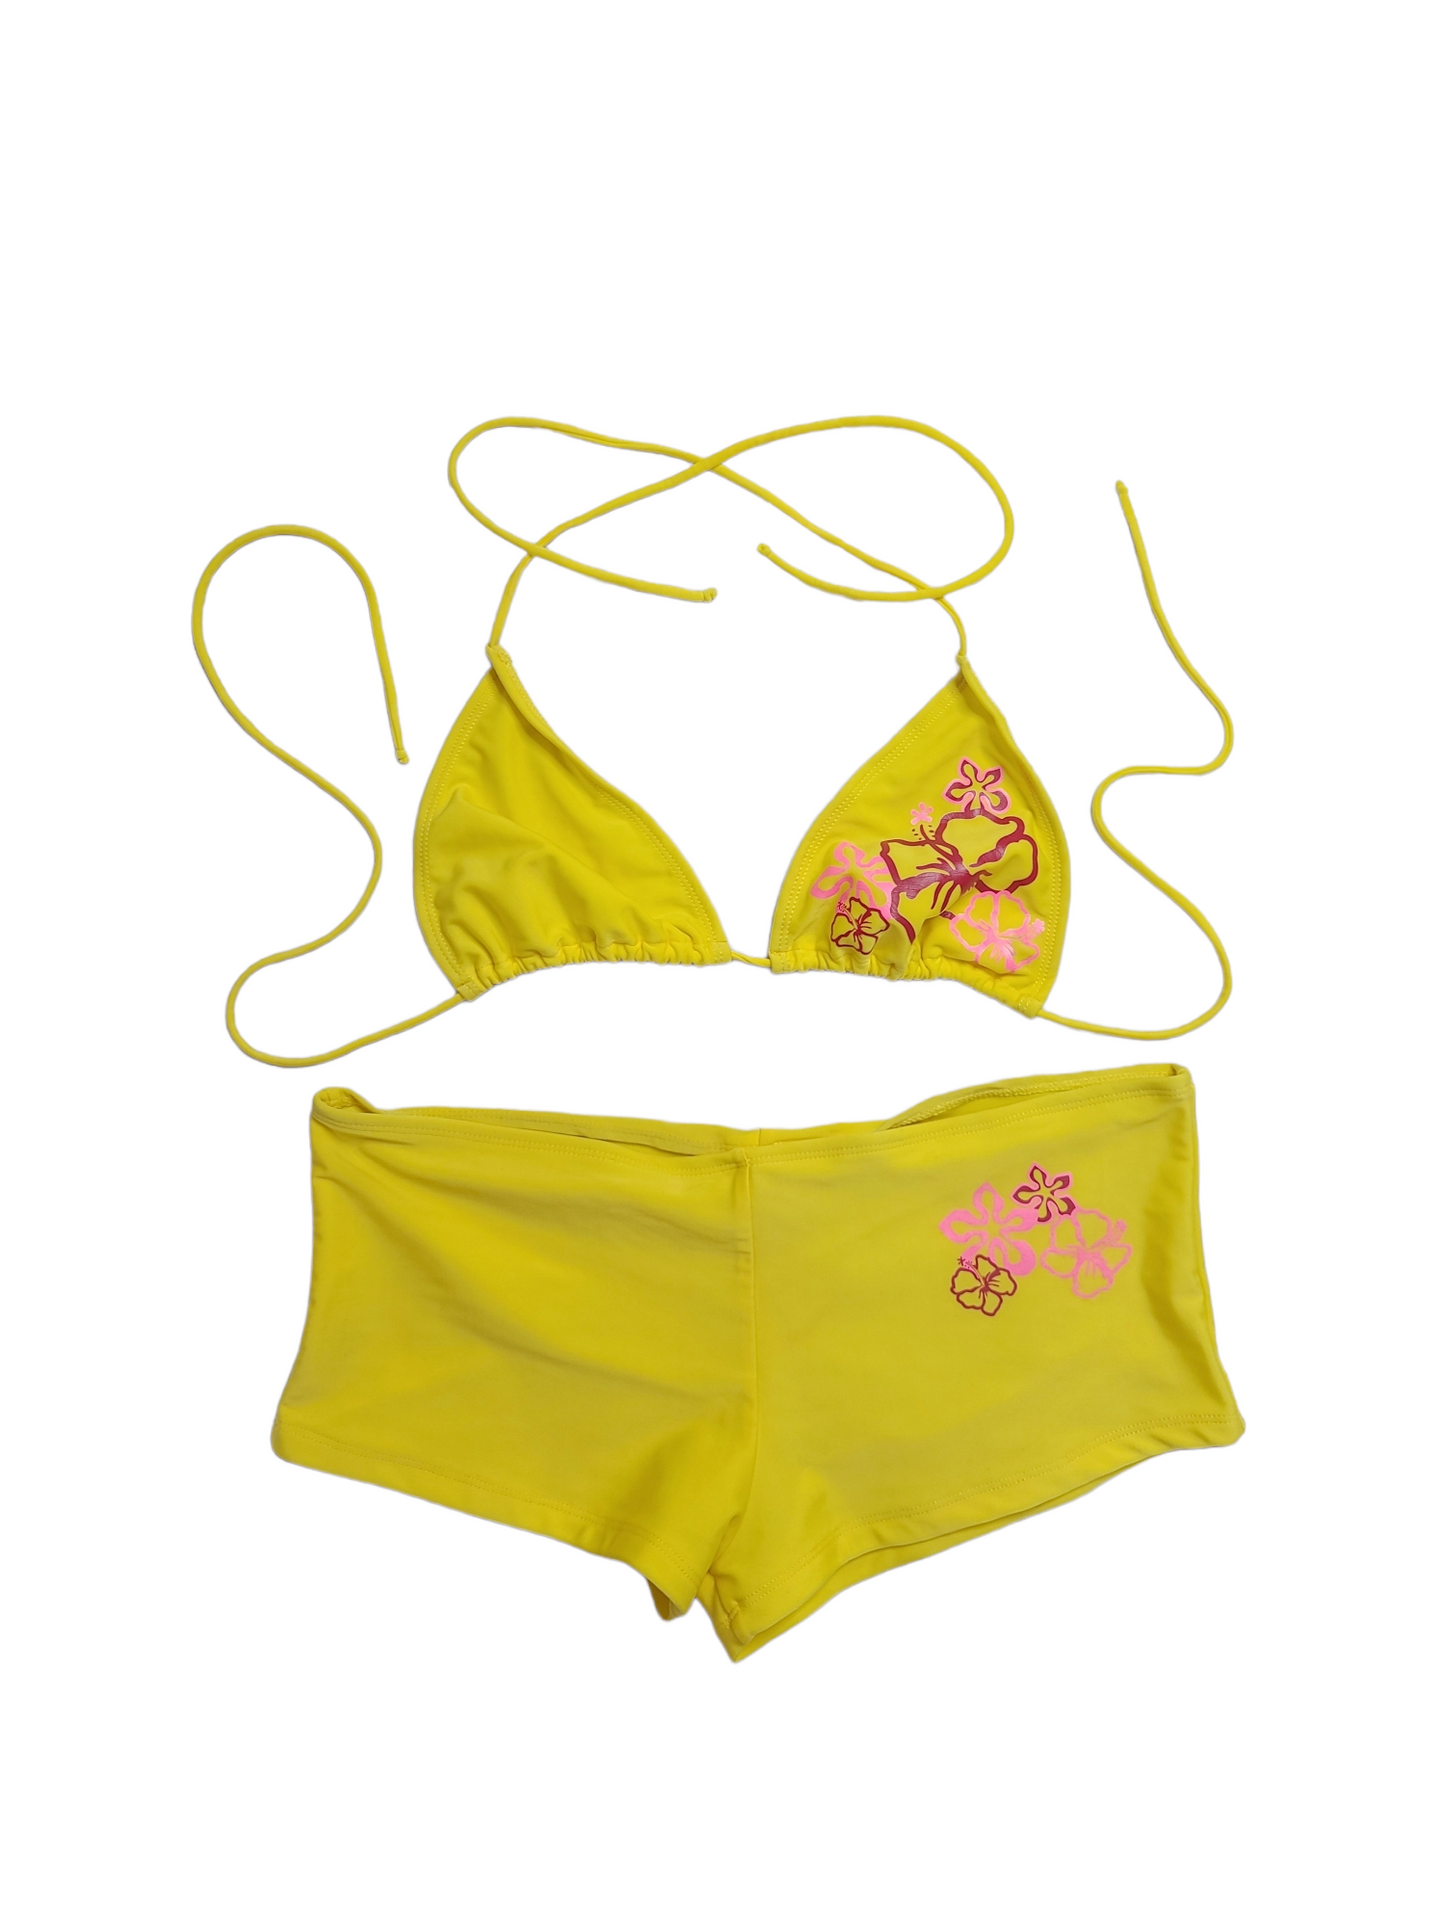 Maillot 2 pieces hibiscus 2000s vintage pastel fancy y2k mini bag indie style bratz hawaii beachwear 90s